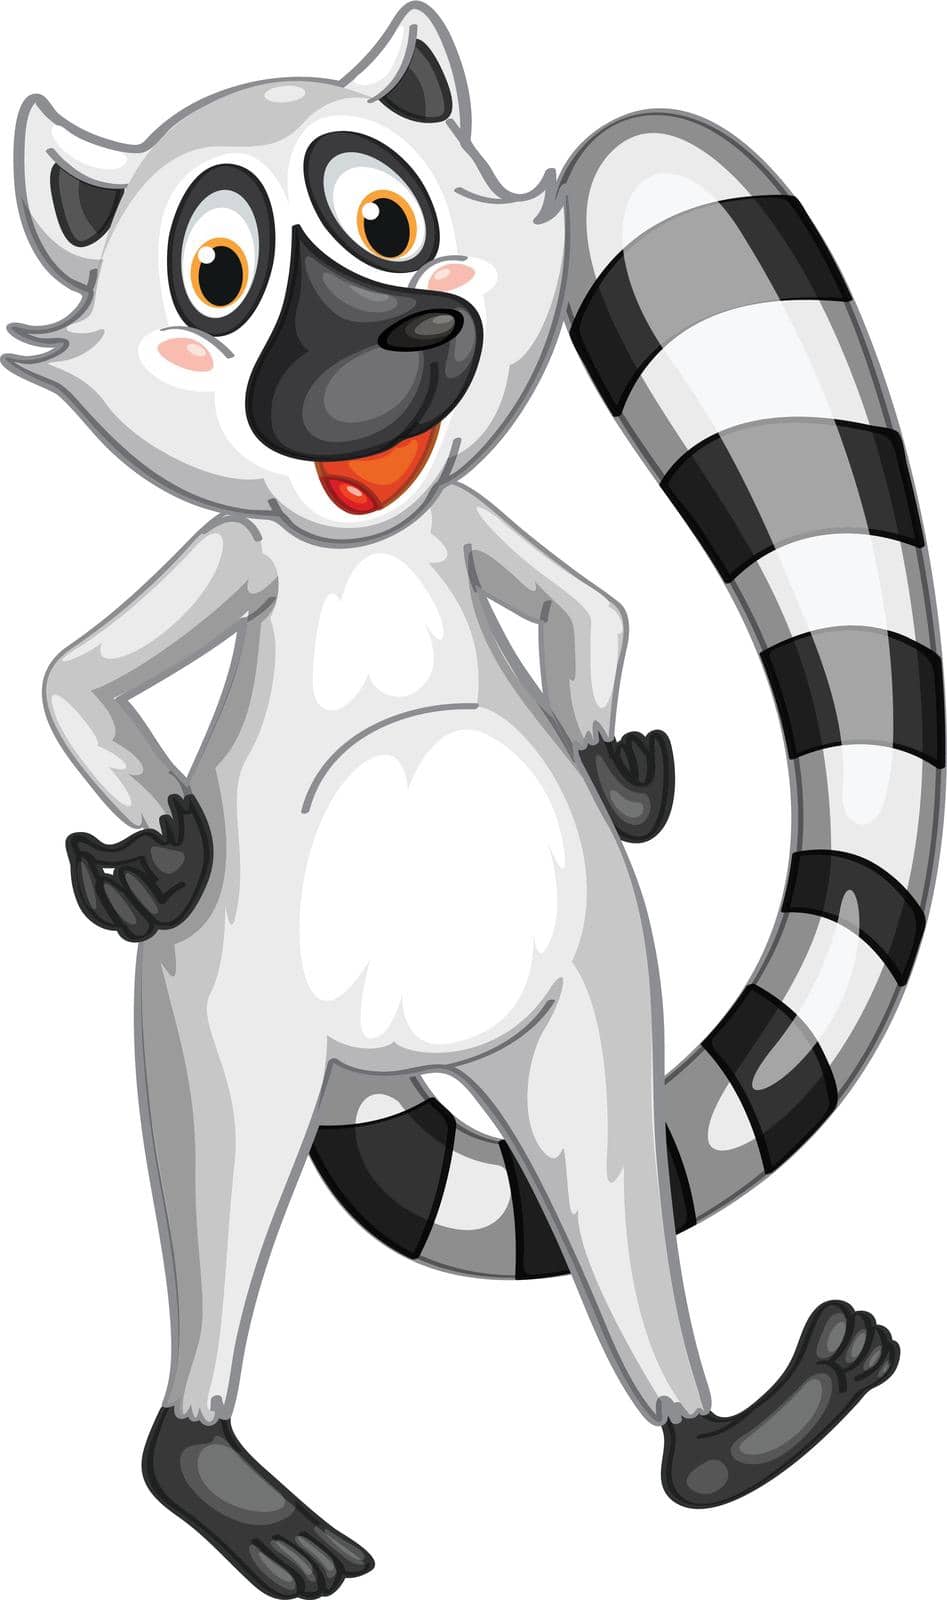 Illustration of a comical lemur